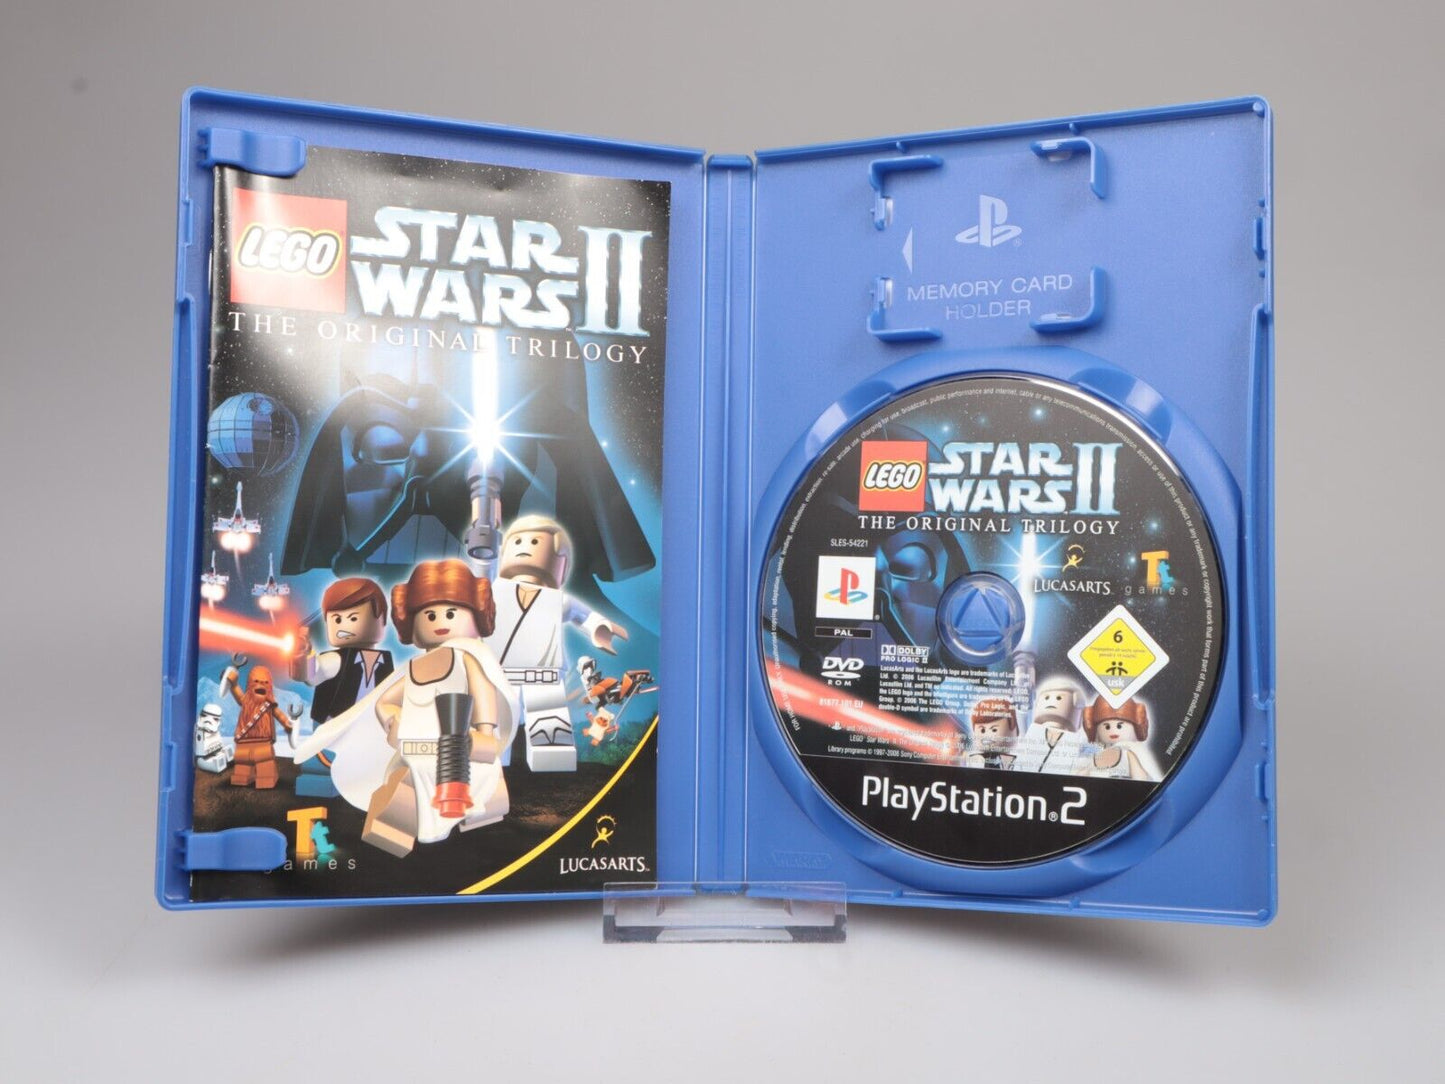 PS2 | Lego Star Wars II: The Original Trilogy (NL) (PAL)